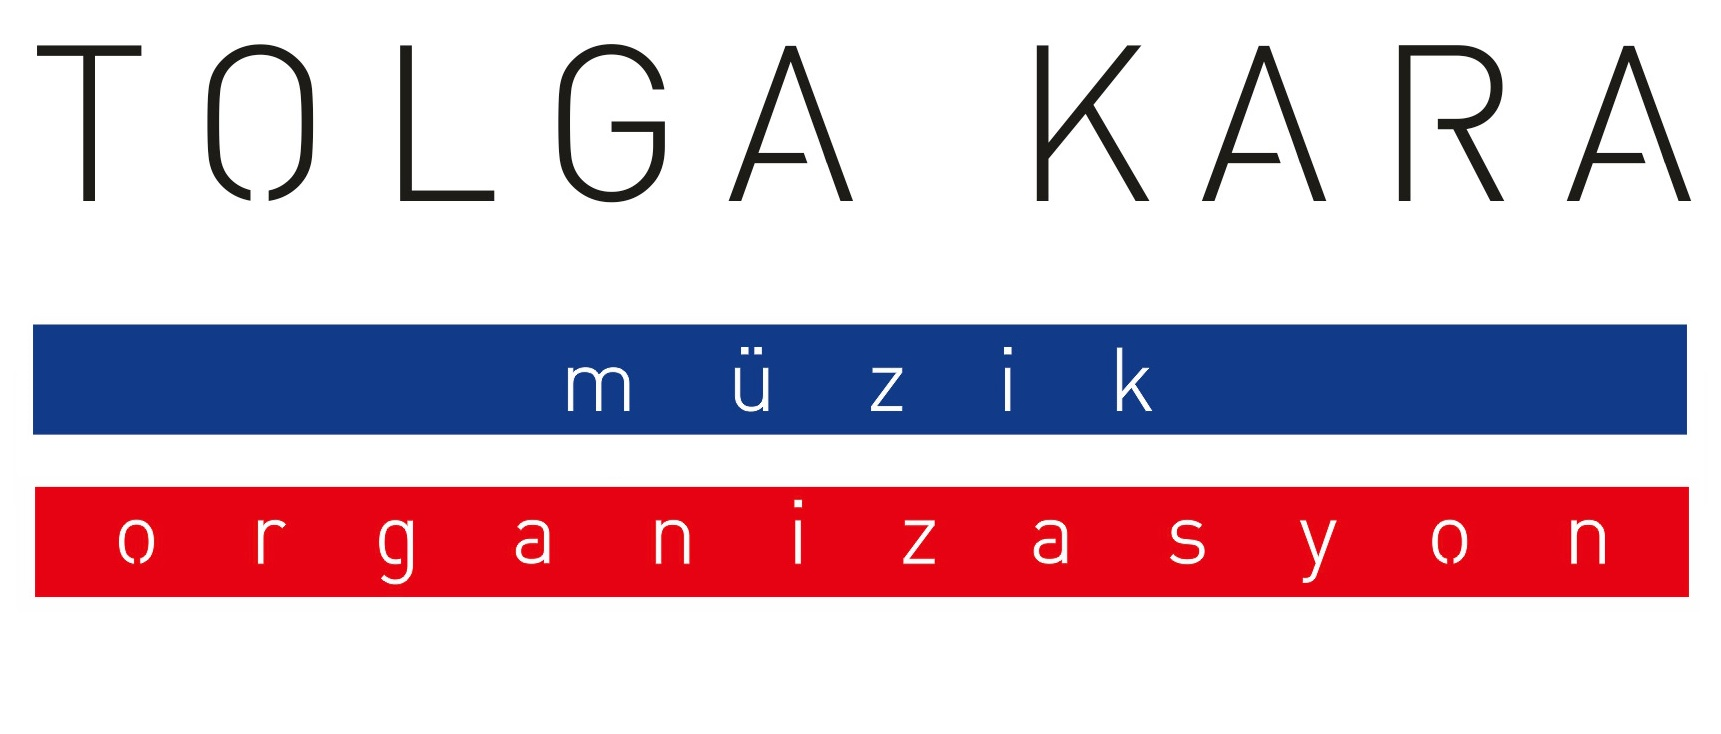 2017 Urla Kna Organizasyonlarmz